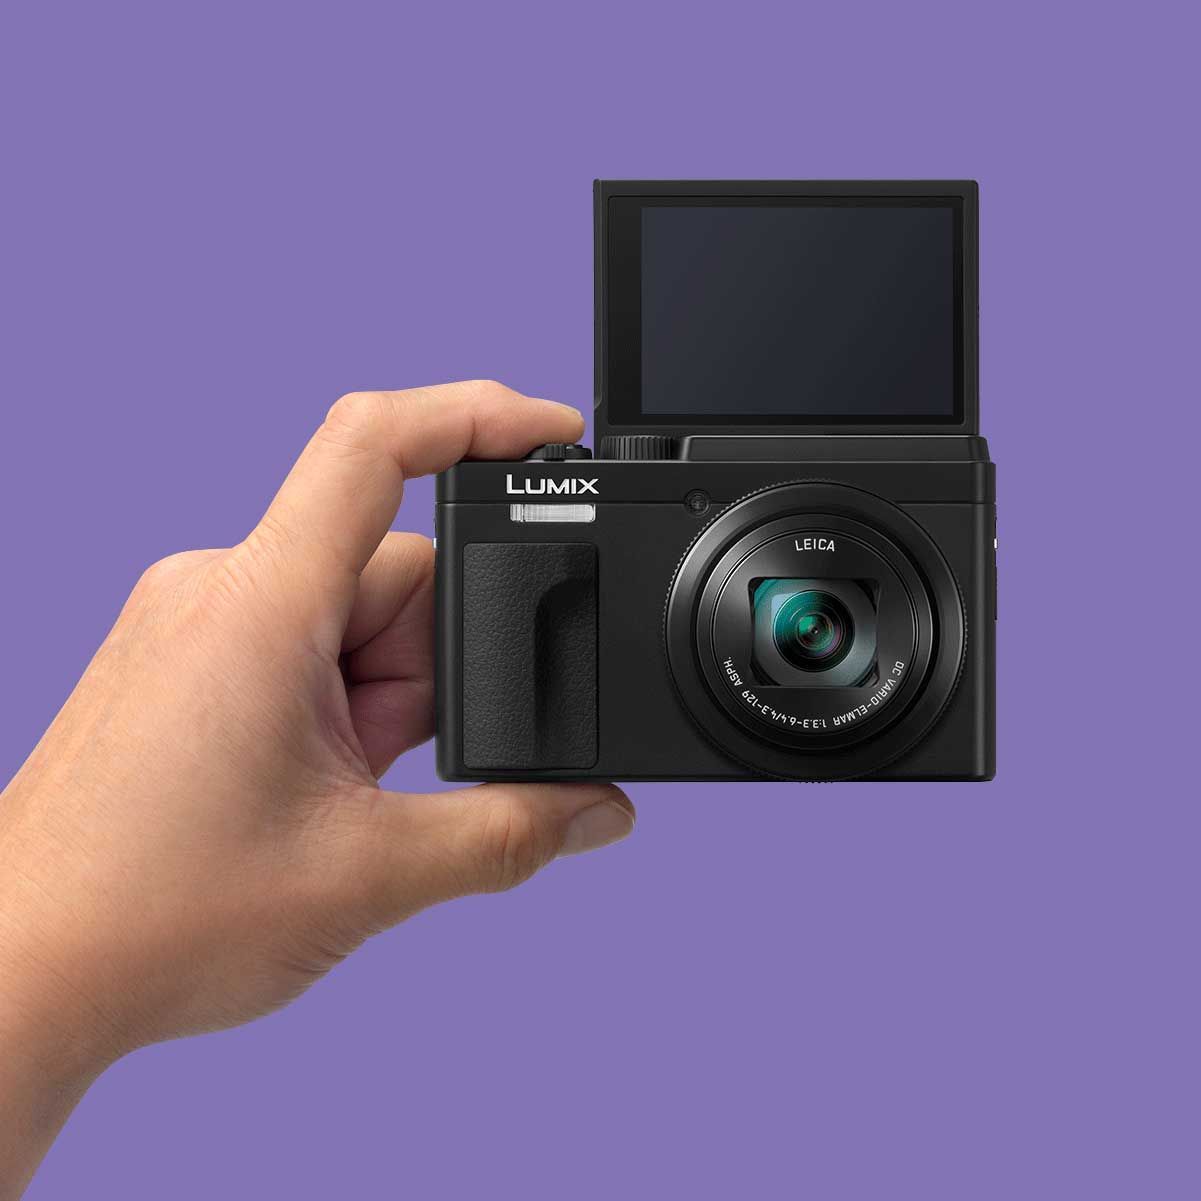 Scheermes kromme steenkool Panasonic Lumix TZ95 review: a compact camera perfect for travel